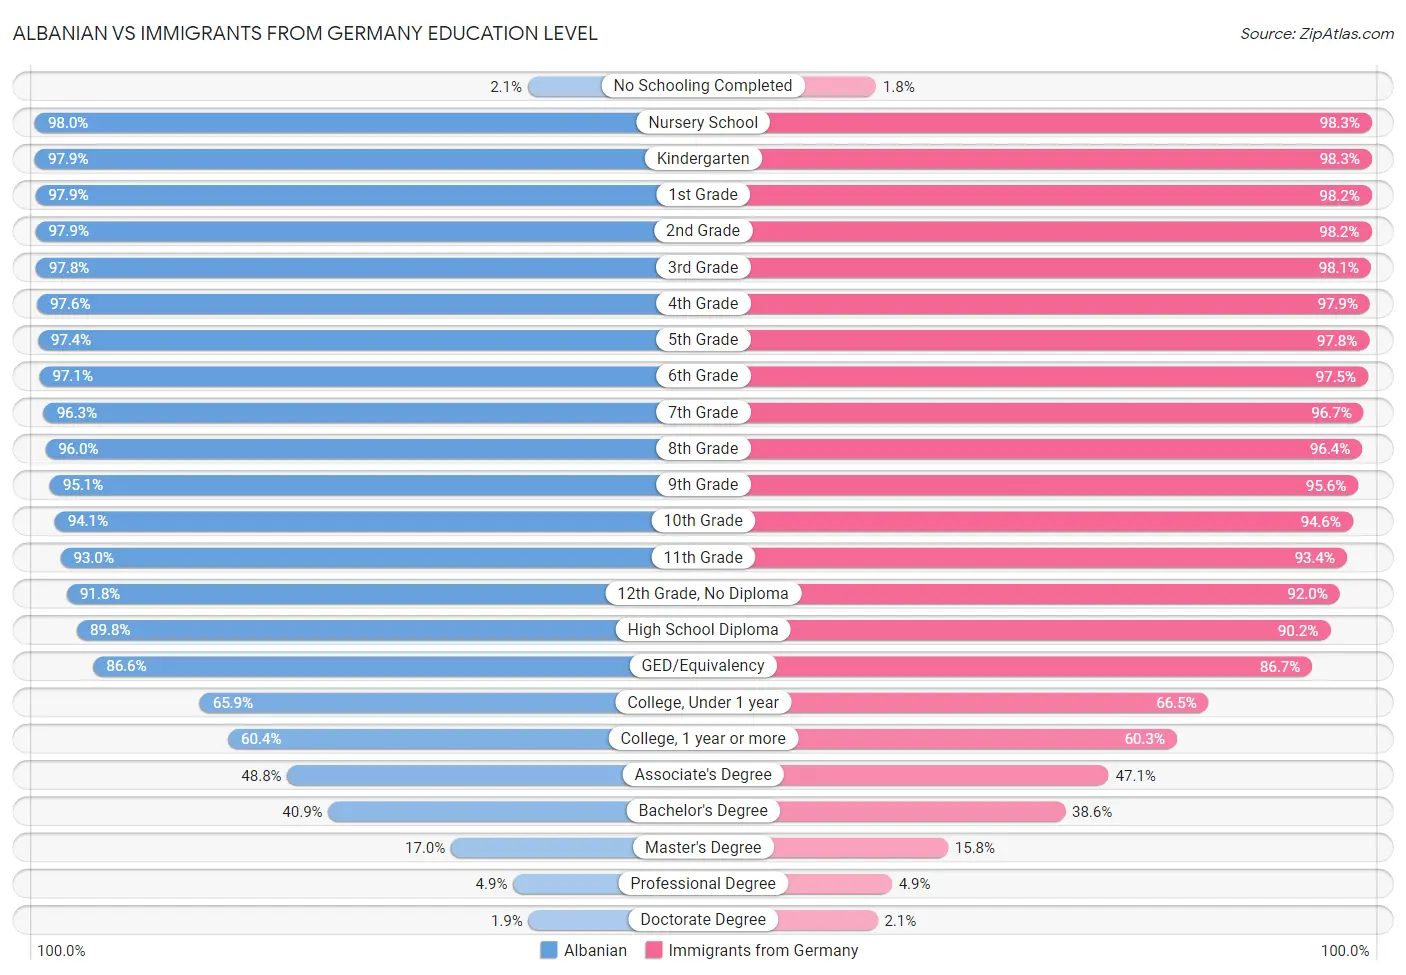 Albanian vs Immigrants from Germany Education Level